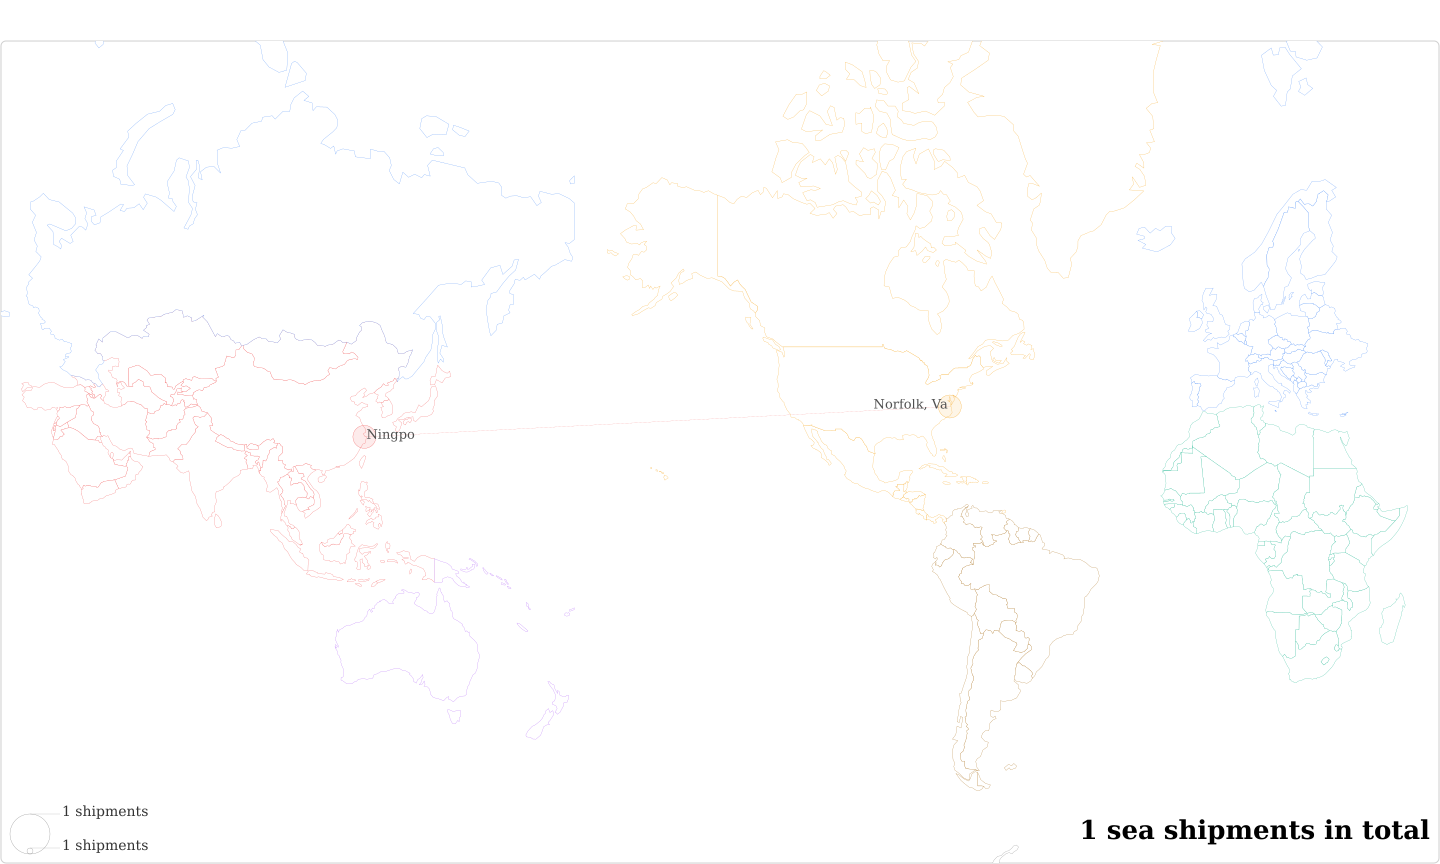 Joerg Kohler Rex Rex Companies's Imports Per Country Map